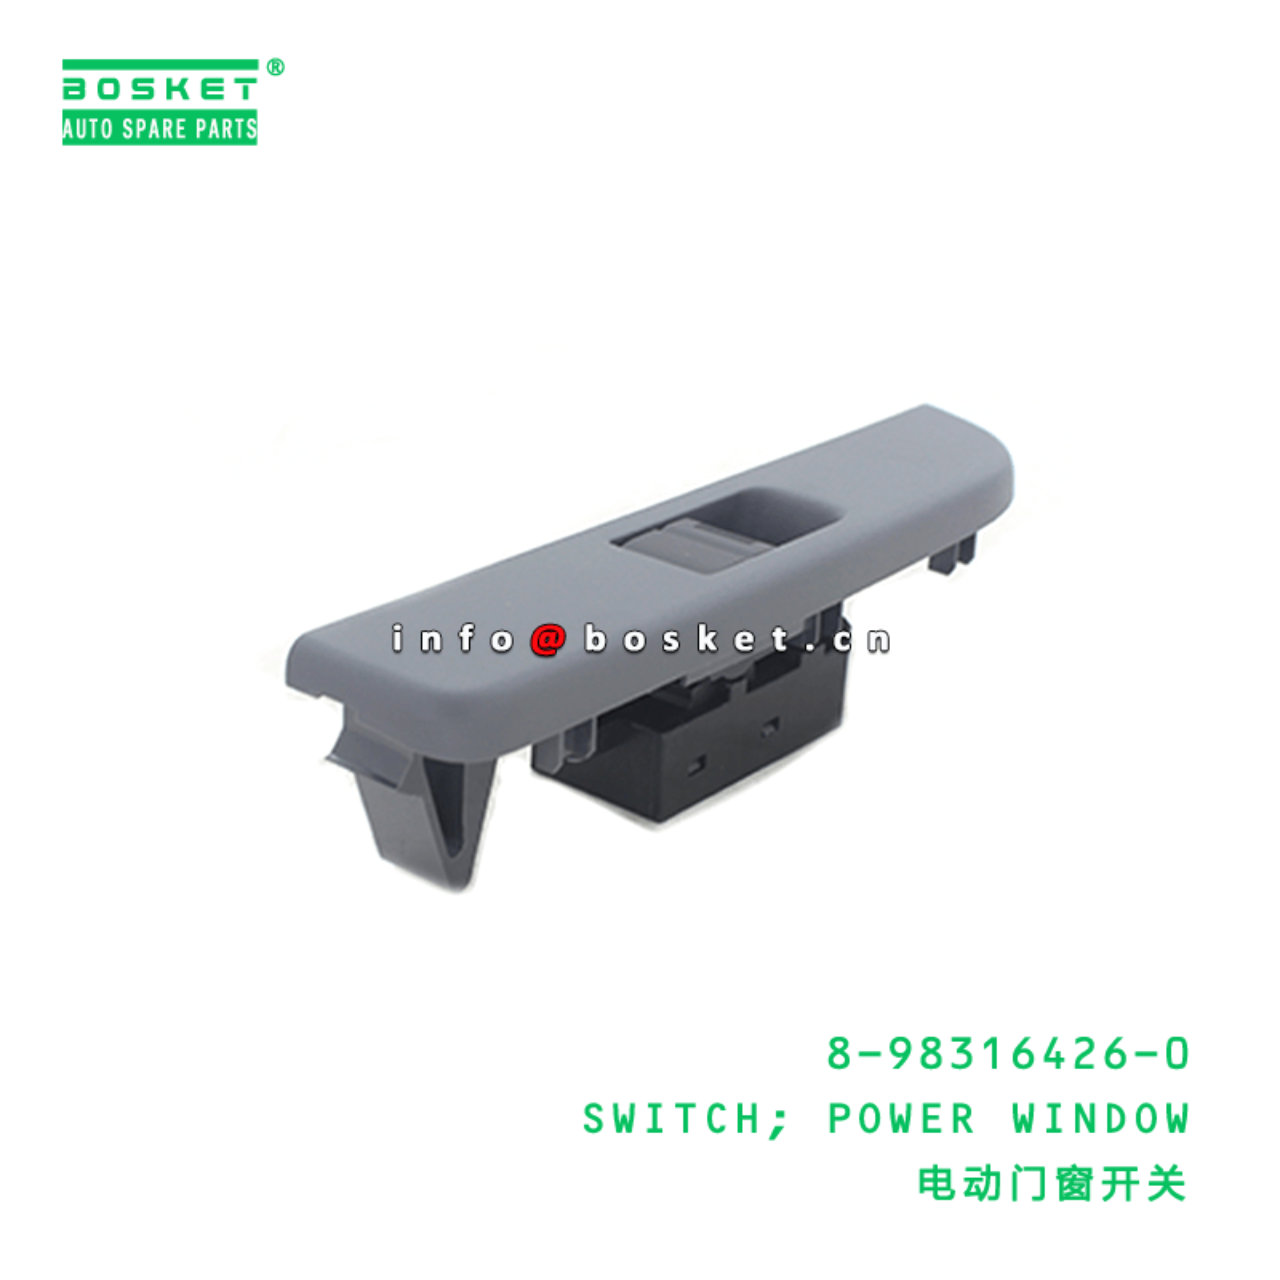  8-98316426-0 Power Window Switch 8983164260 Suitable for ISUZU NHR